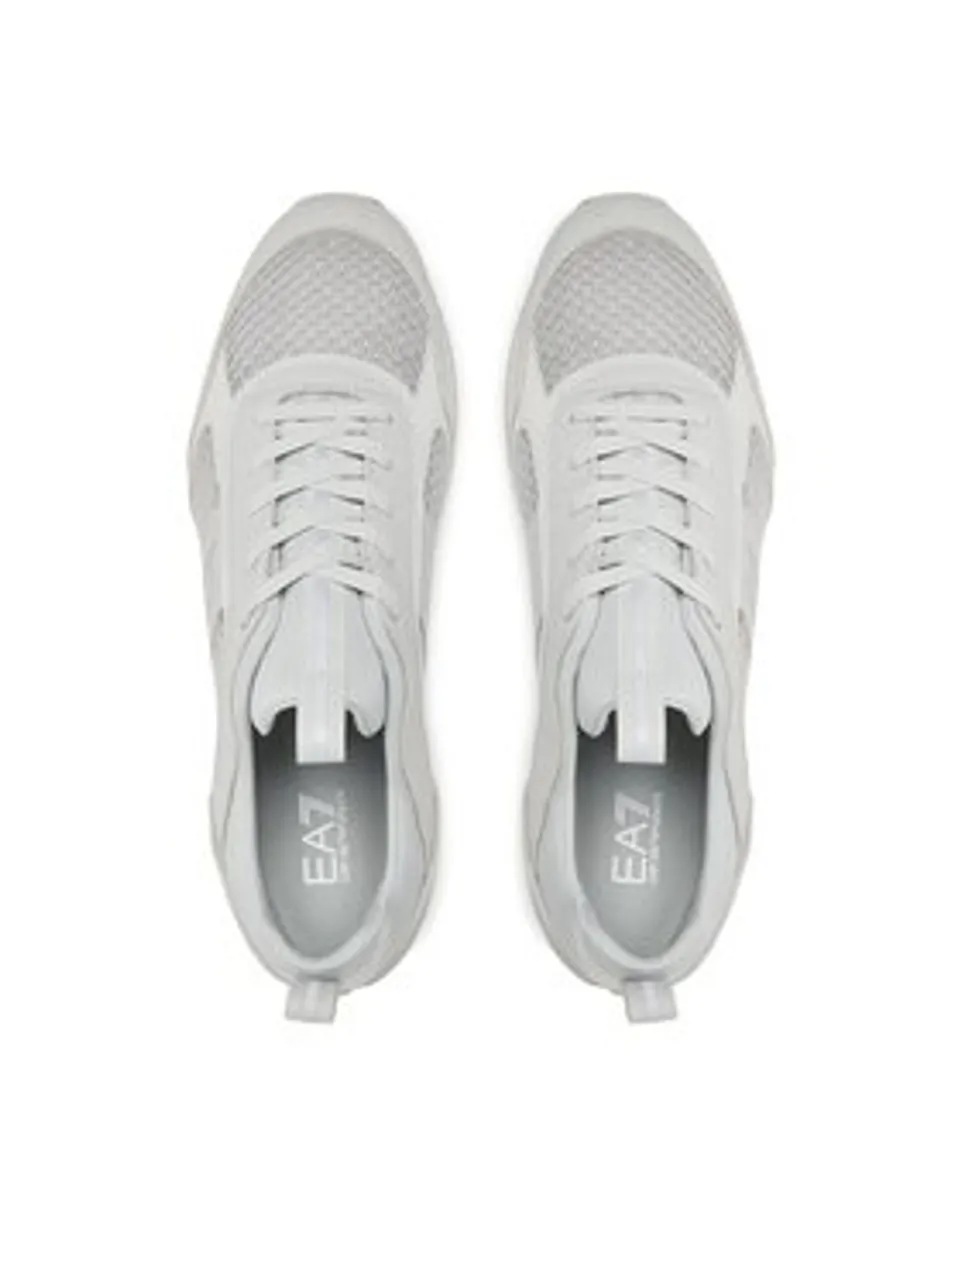 EA7 Emporio Armani Sneakers X8X027 XK050 S296 Grau